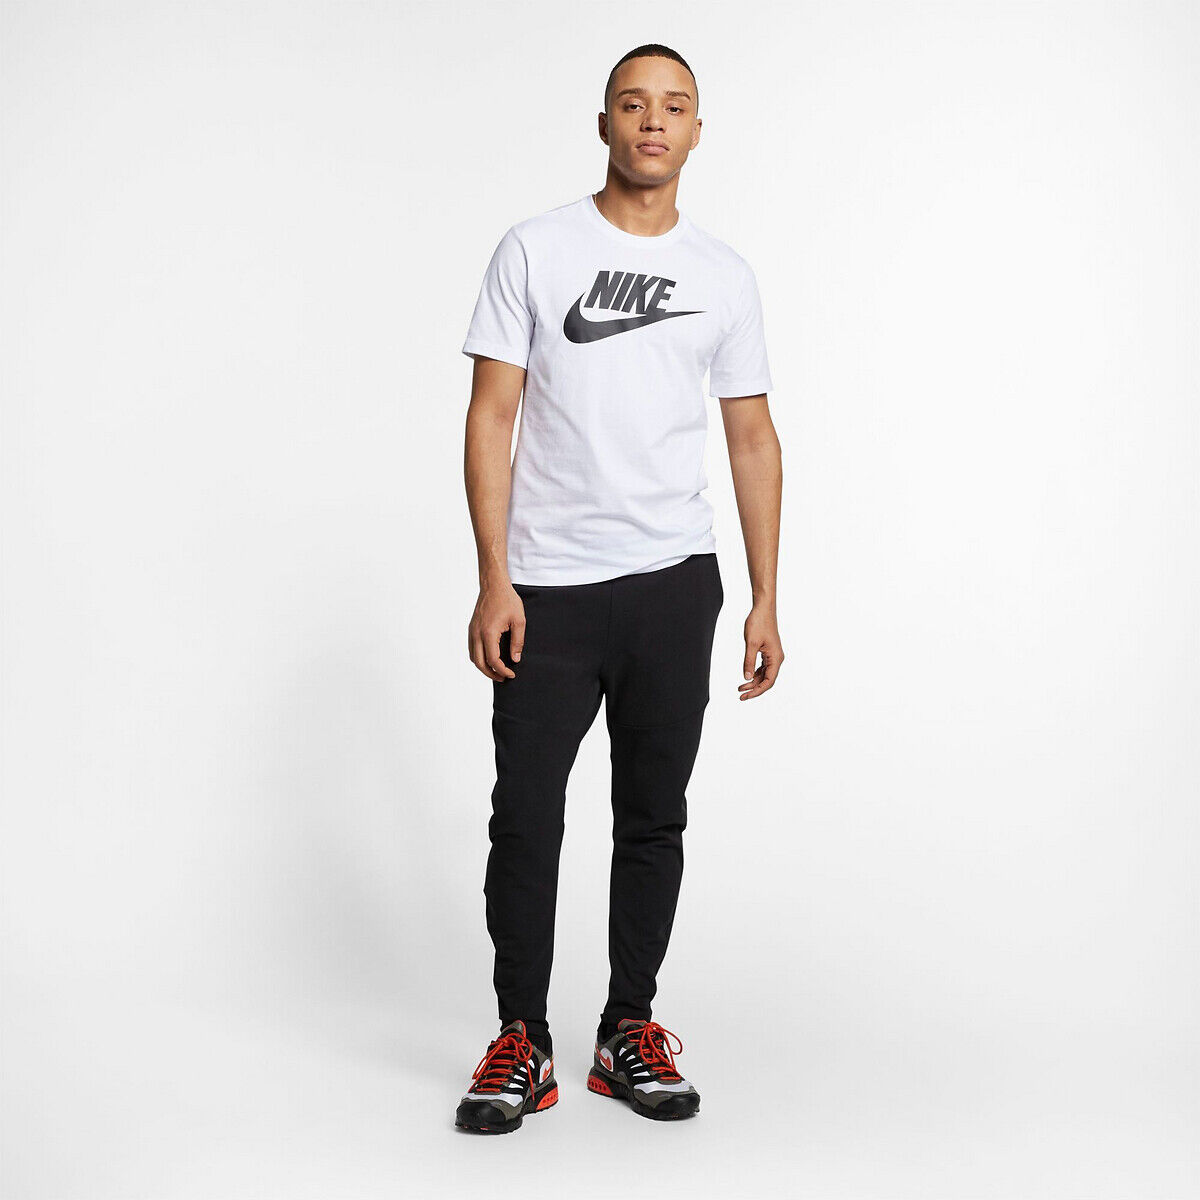 Nike T-shirt Nike Sportswear   branco/preto